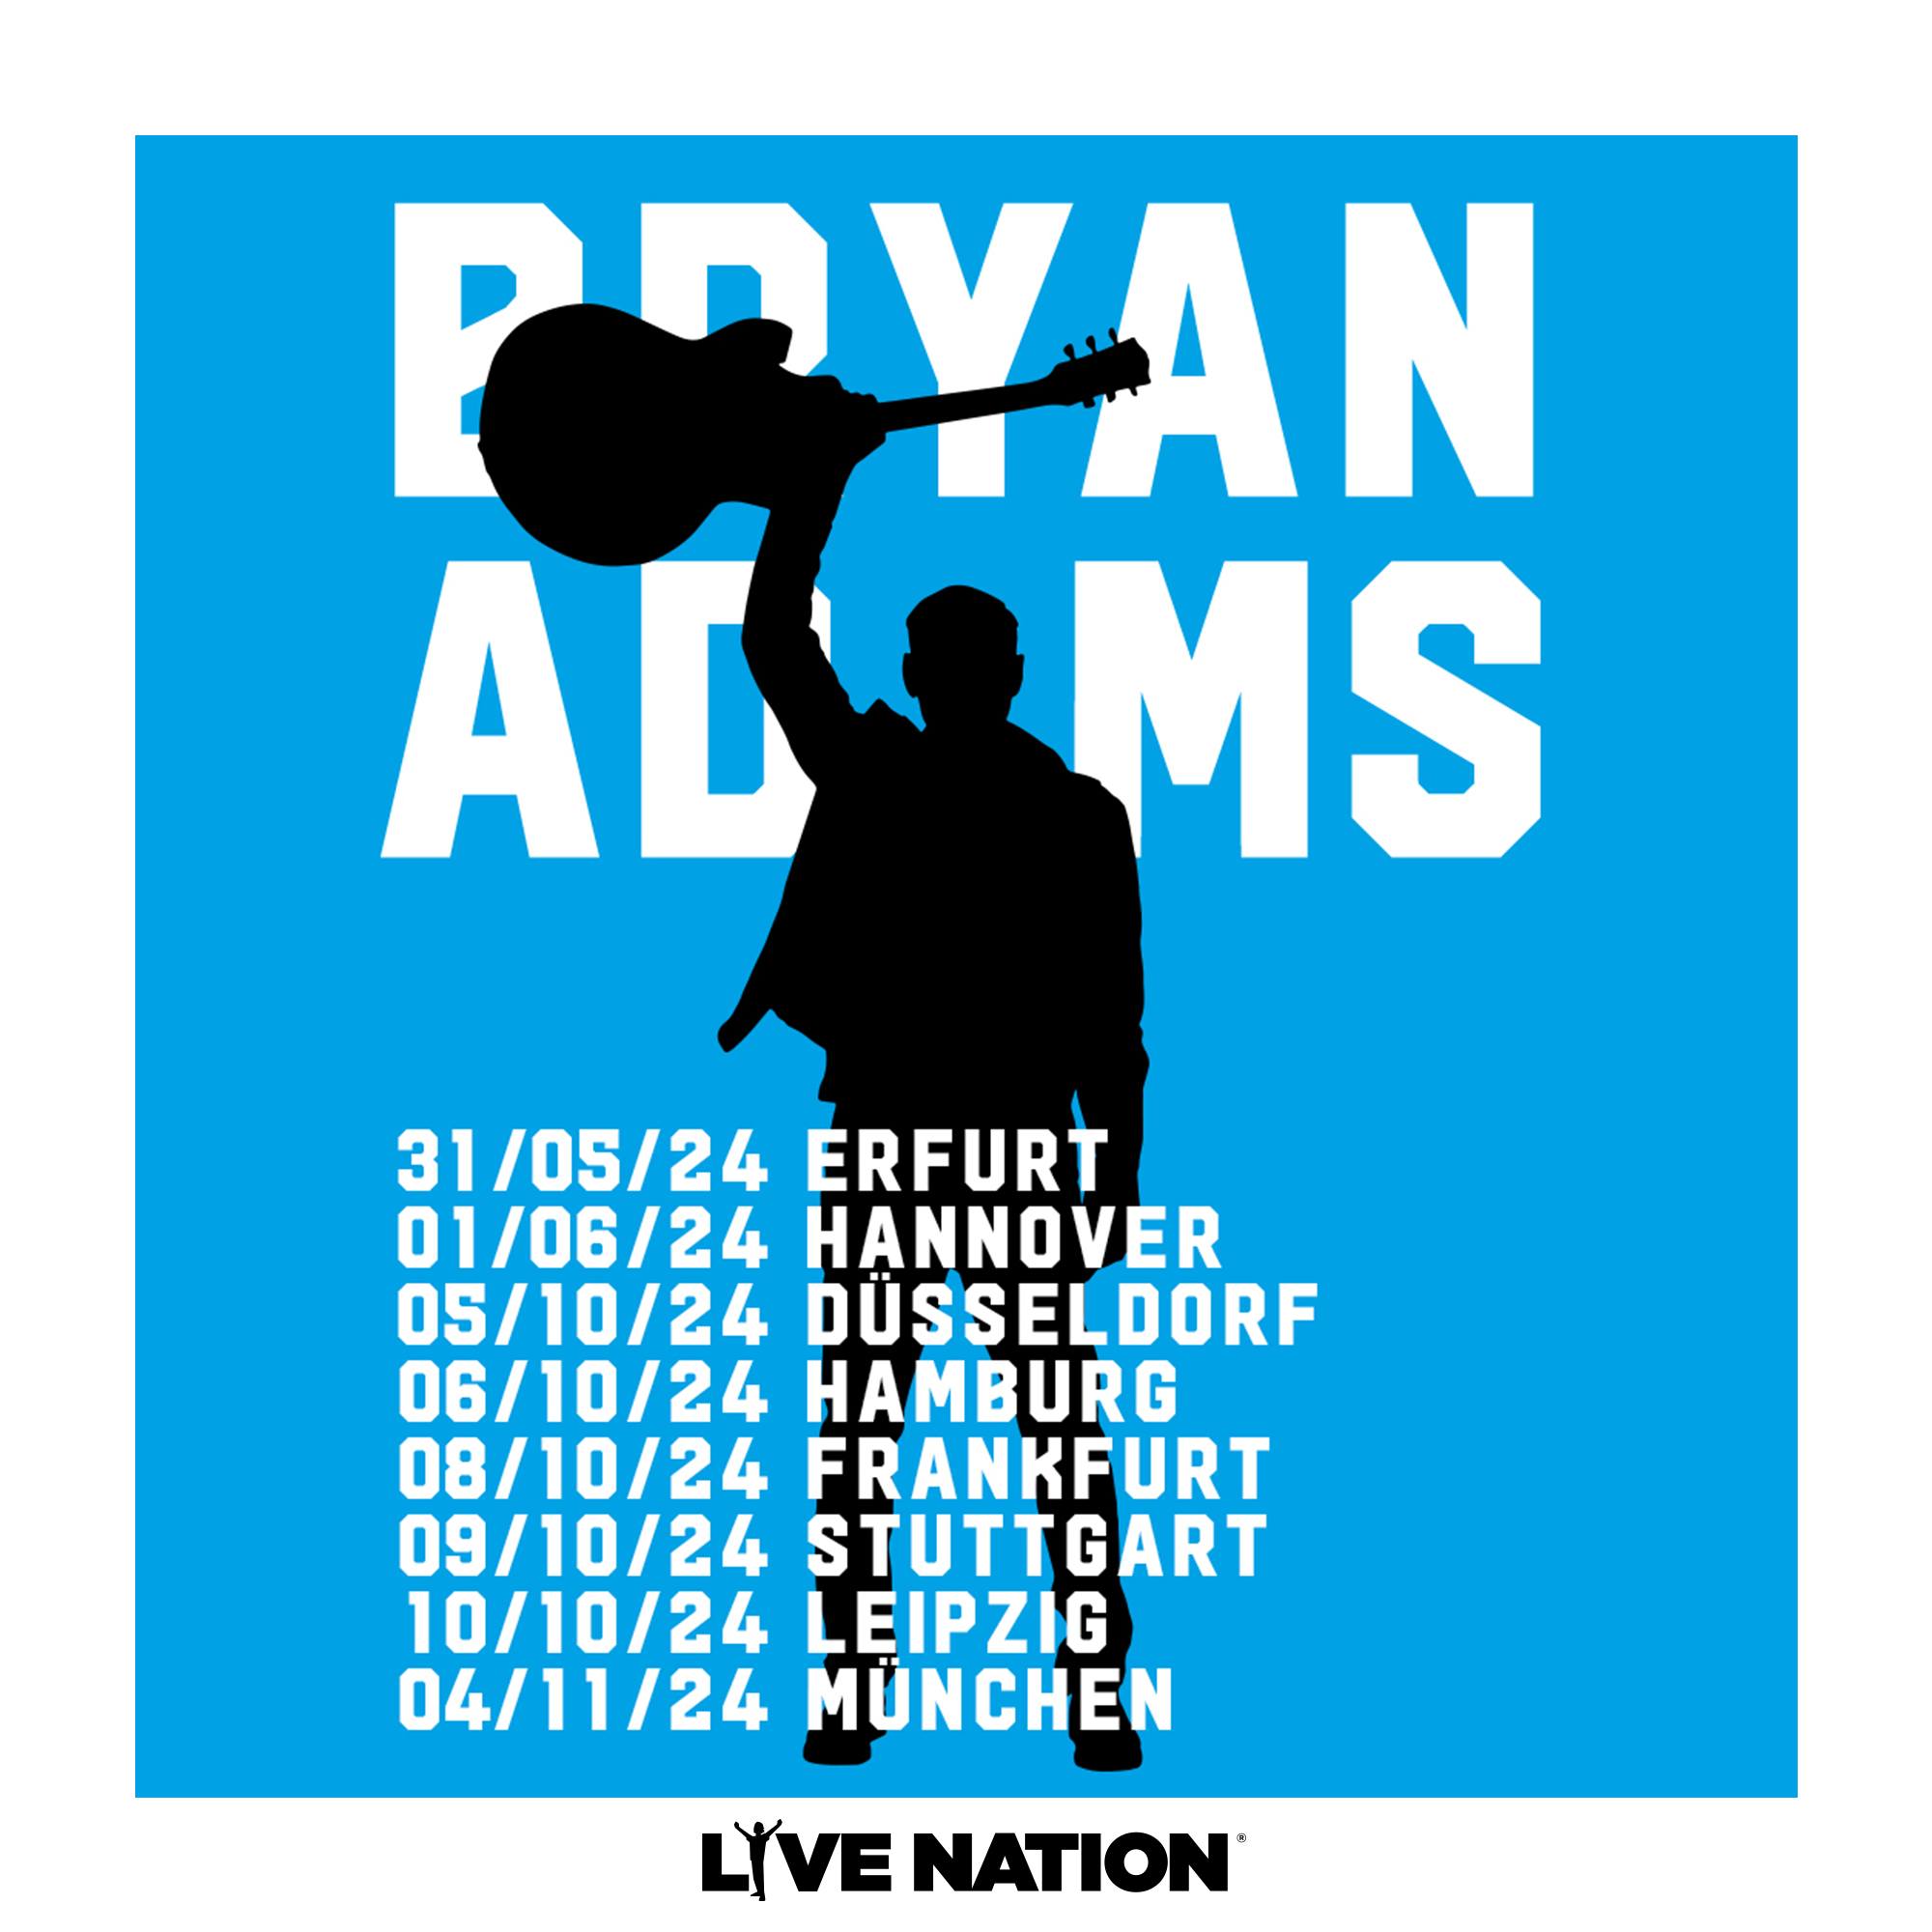 Bryan Adams at Festhalle Frankfurt Tickets